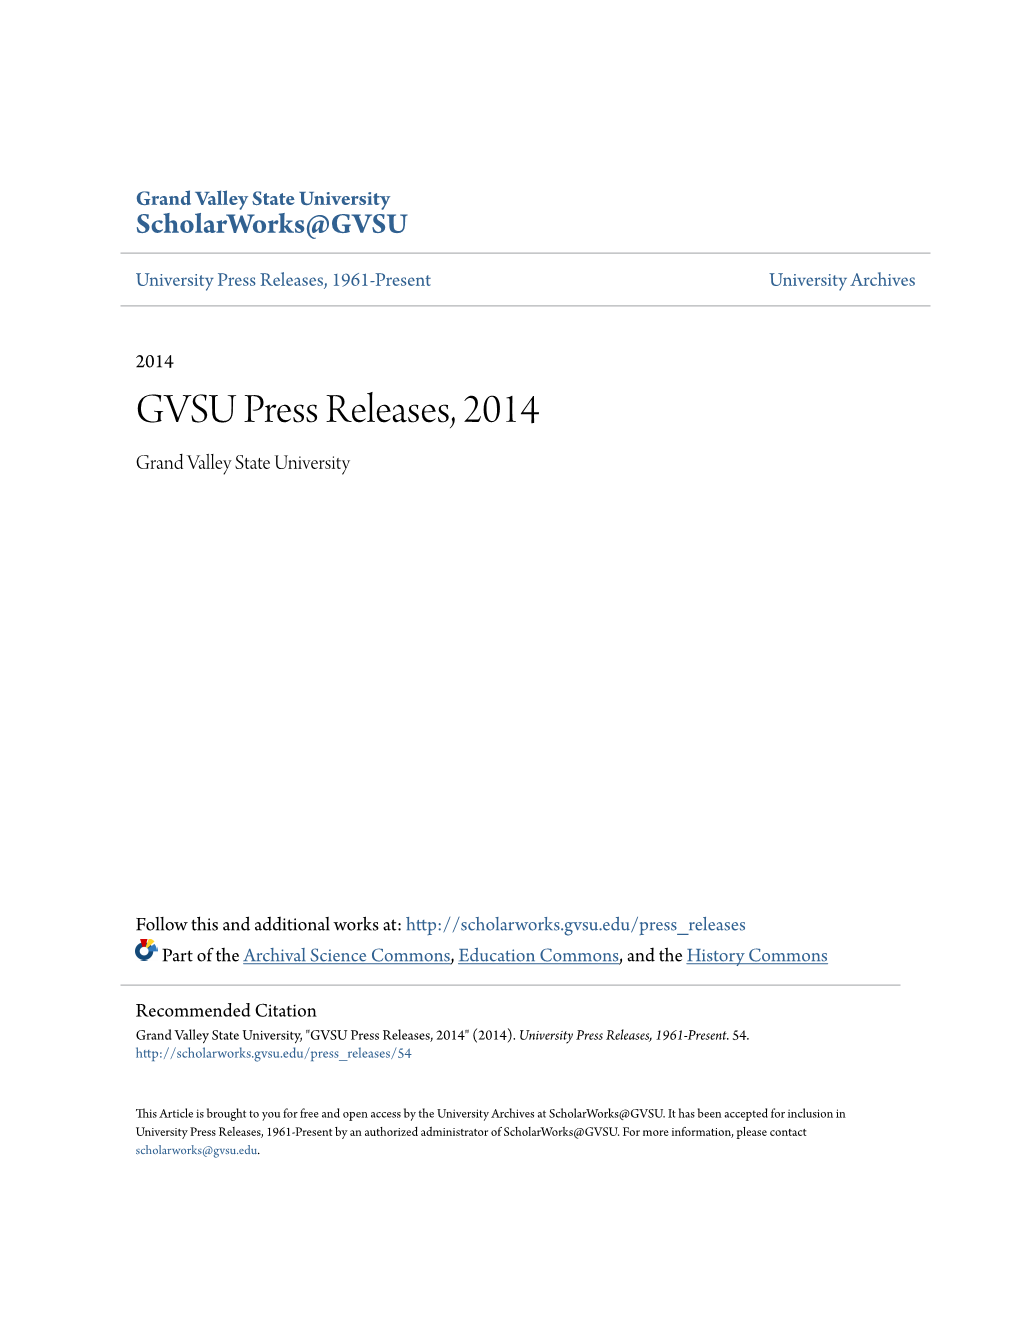 GVSU Press Releases, 2014 Grand Valley State University